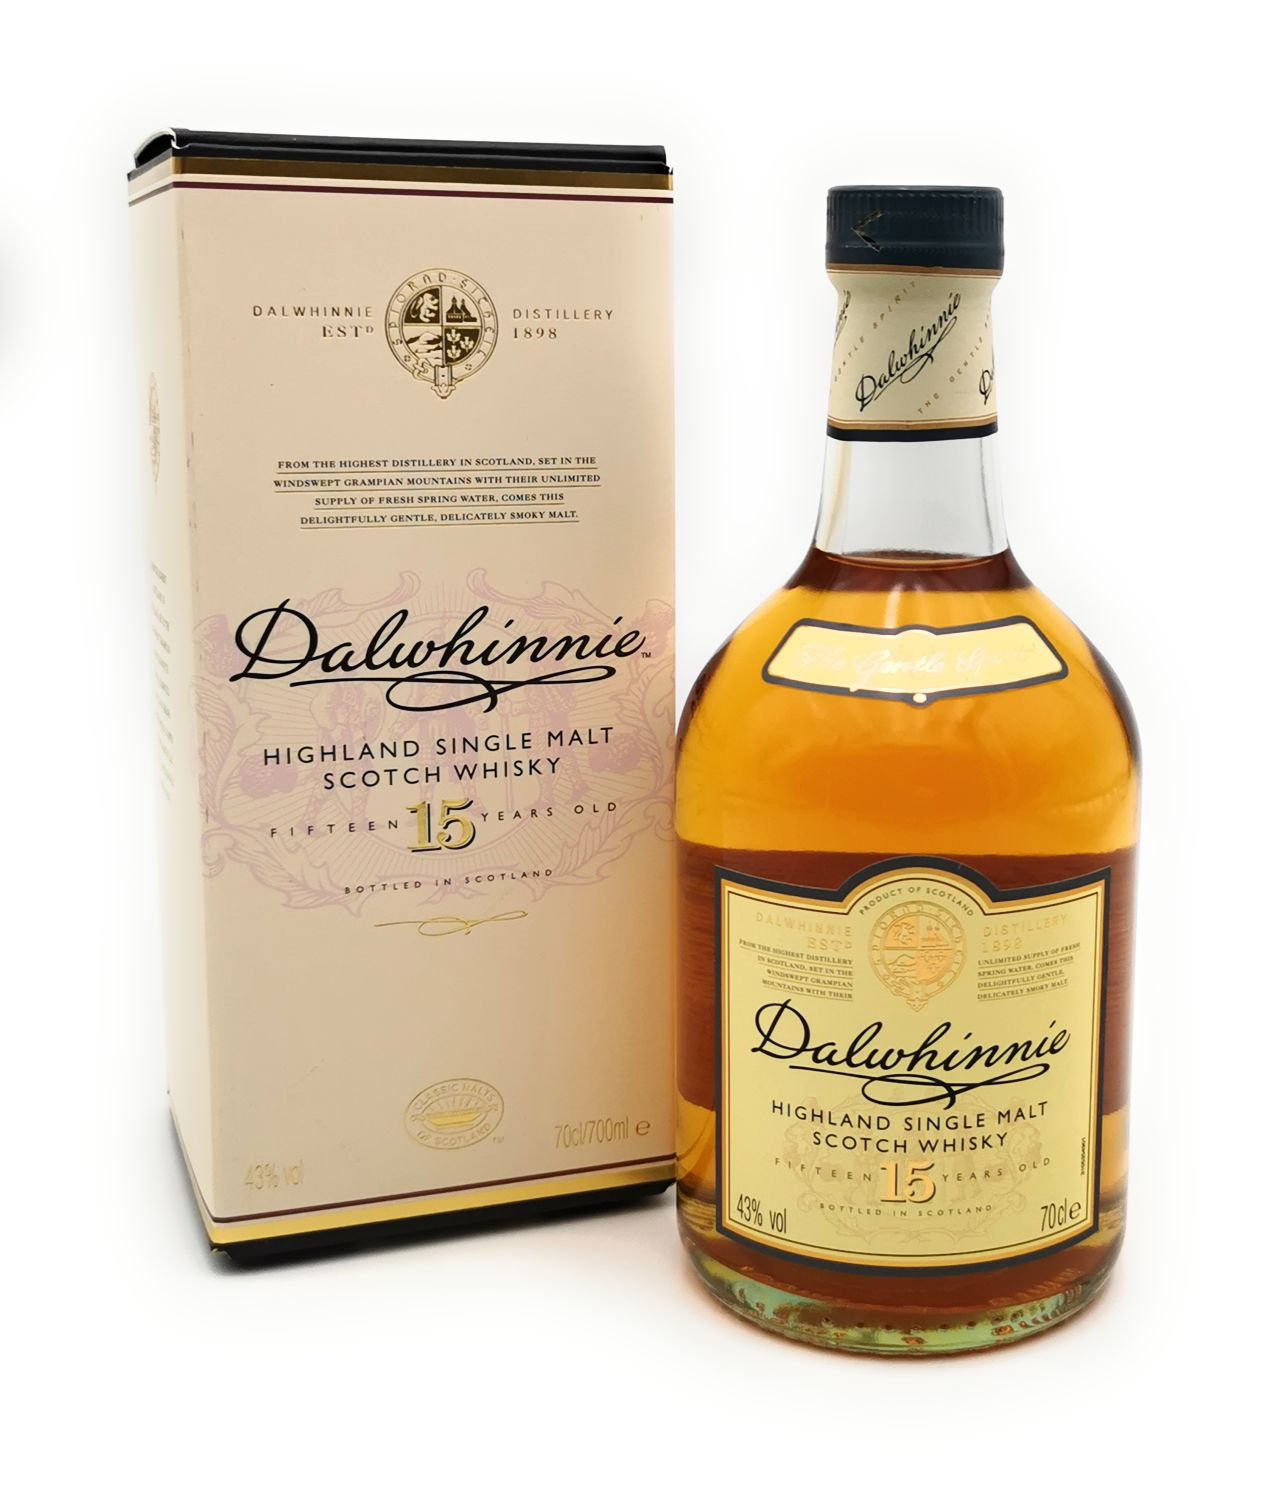 Alkohol 15 1x Whisky Spirituosen Single 0,7 Highland Malt 43% Jahre :: Dalwhinnie Aktion! Scotch l